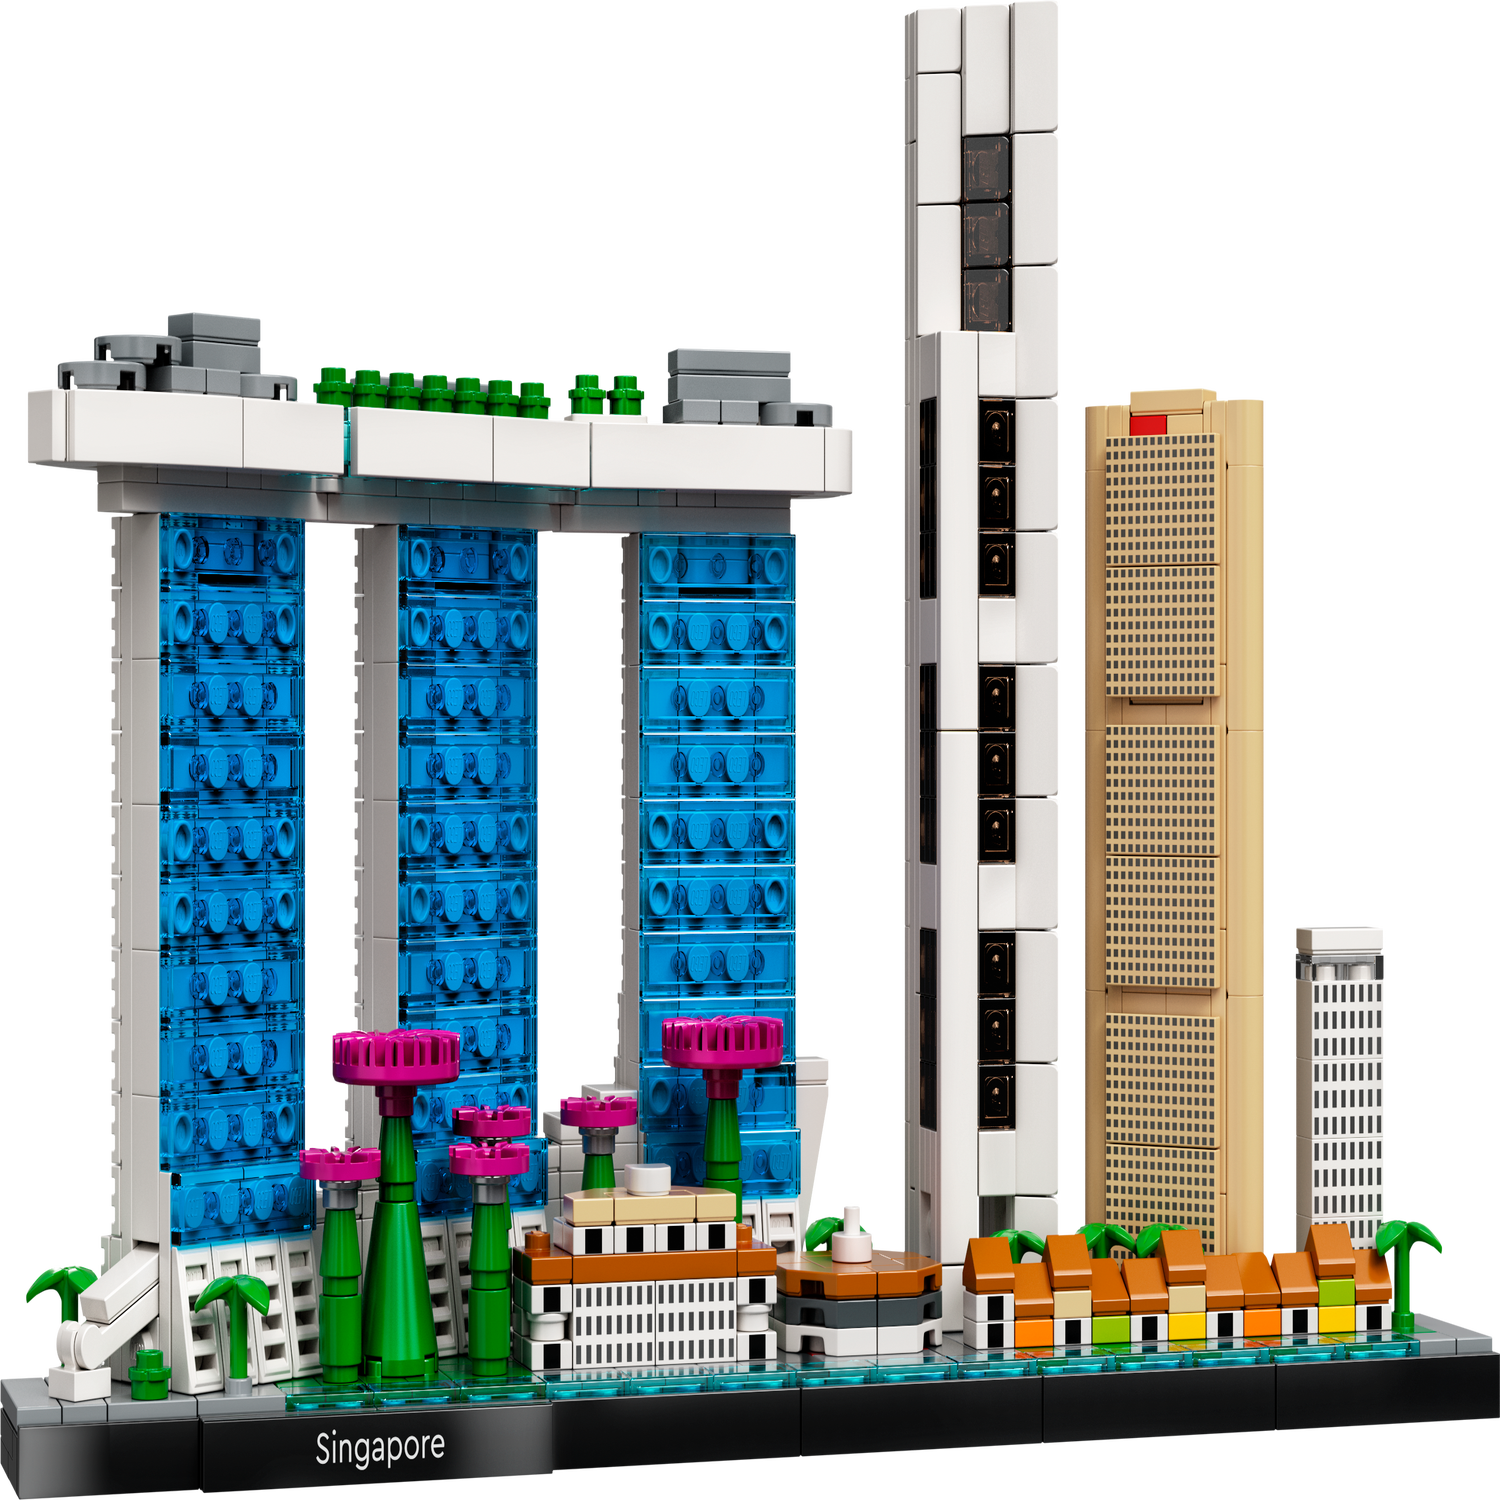  LEGO Architecture Singapore 21057 Building Set